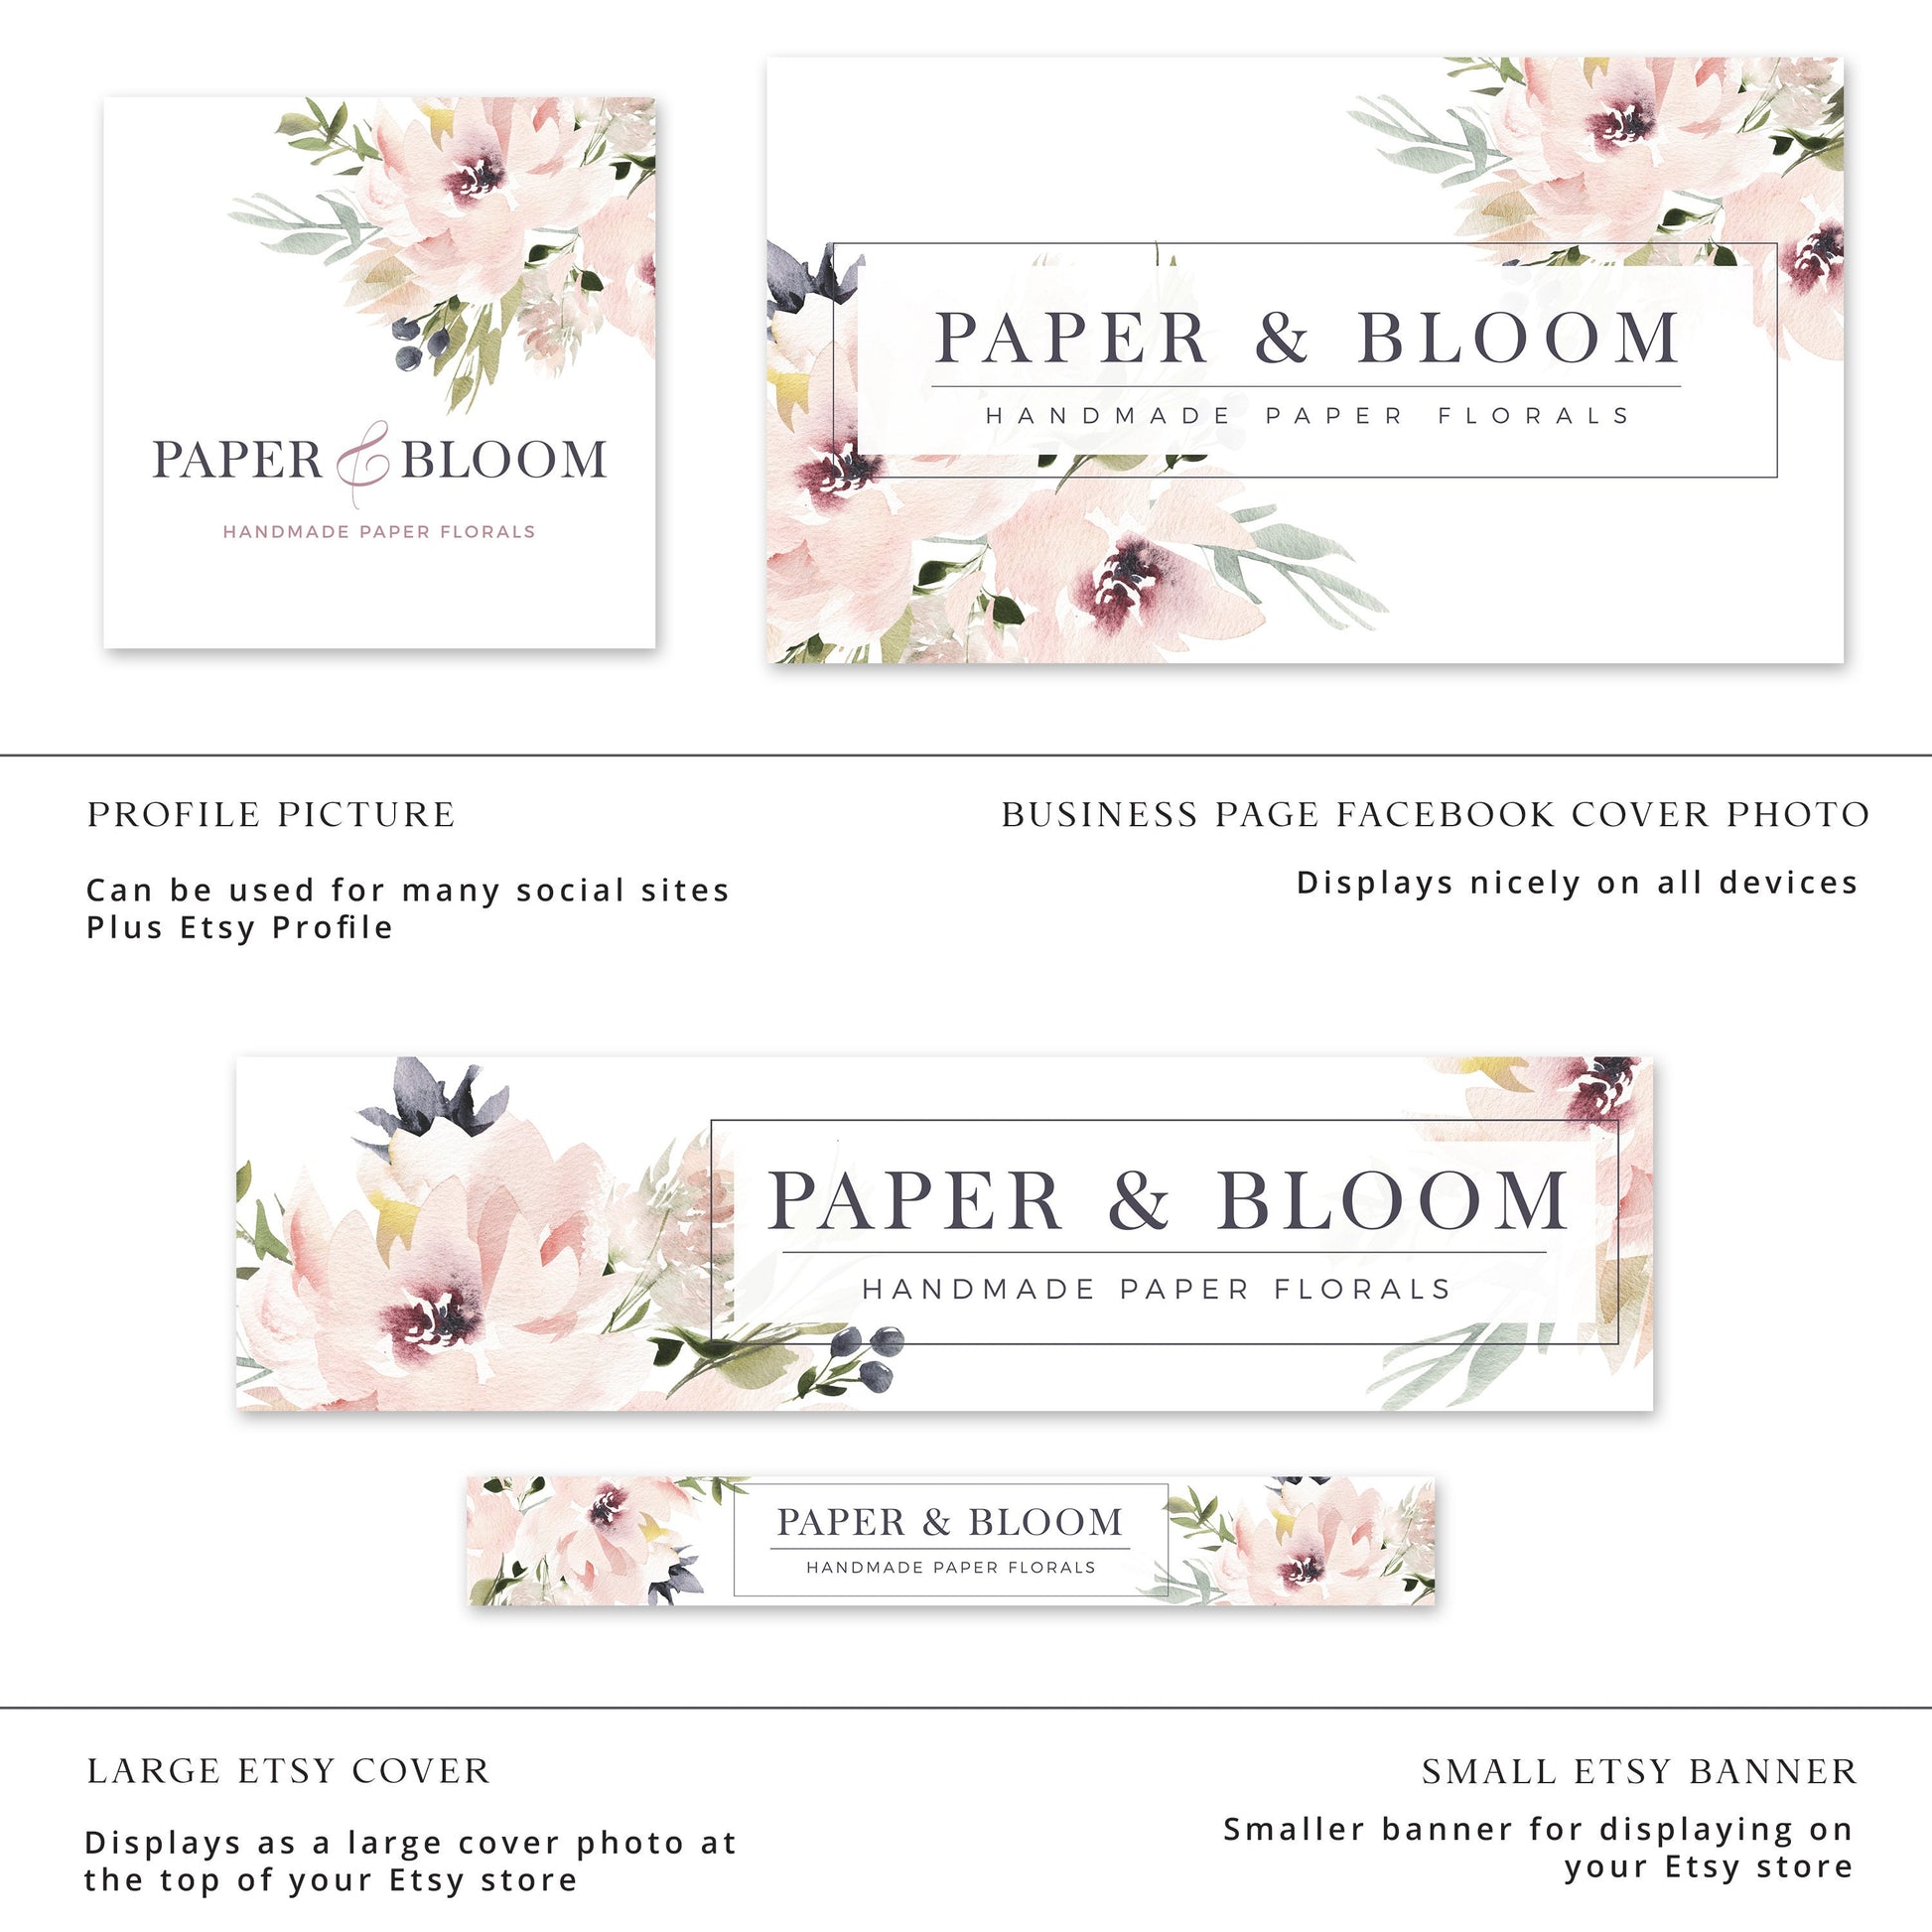 Editable 8pc Boho Branding Bundle, DIY Edit Watercolor Florals Brand Template Kit, Instant Logo Design, Premade Business Logo PB-001